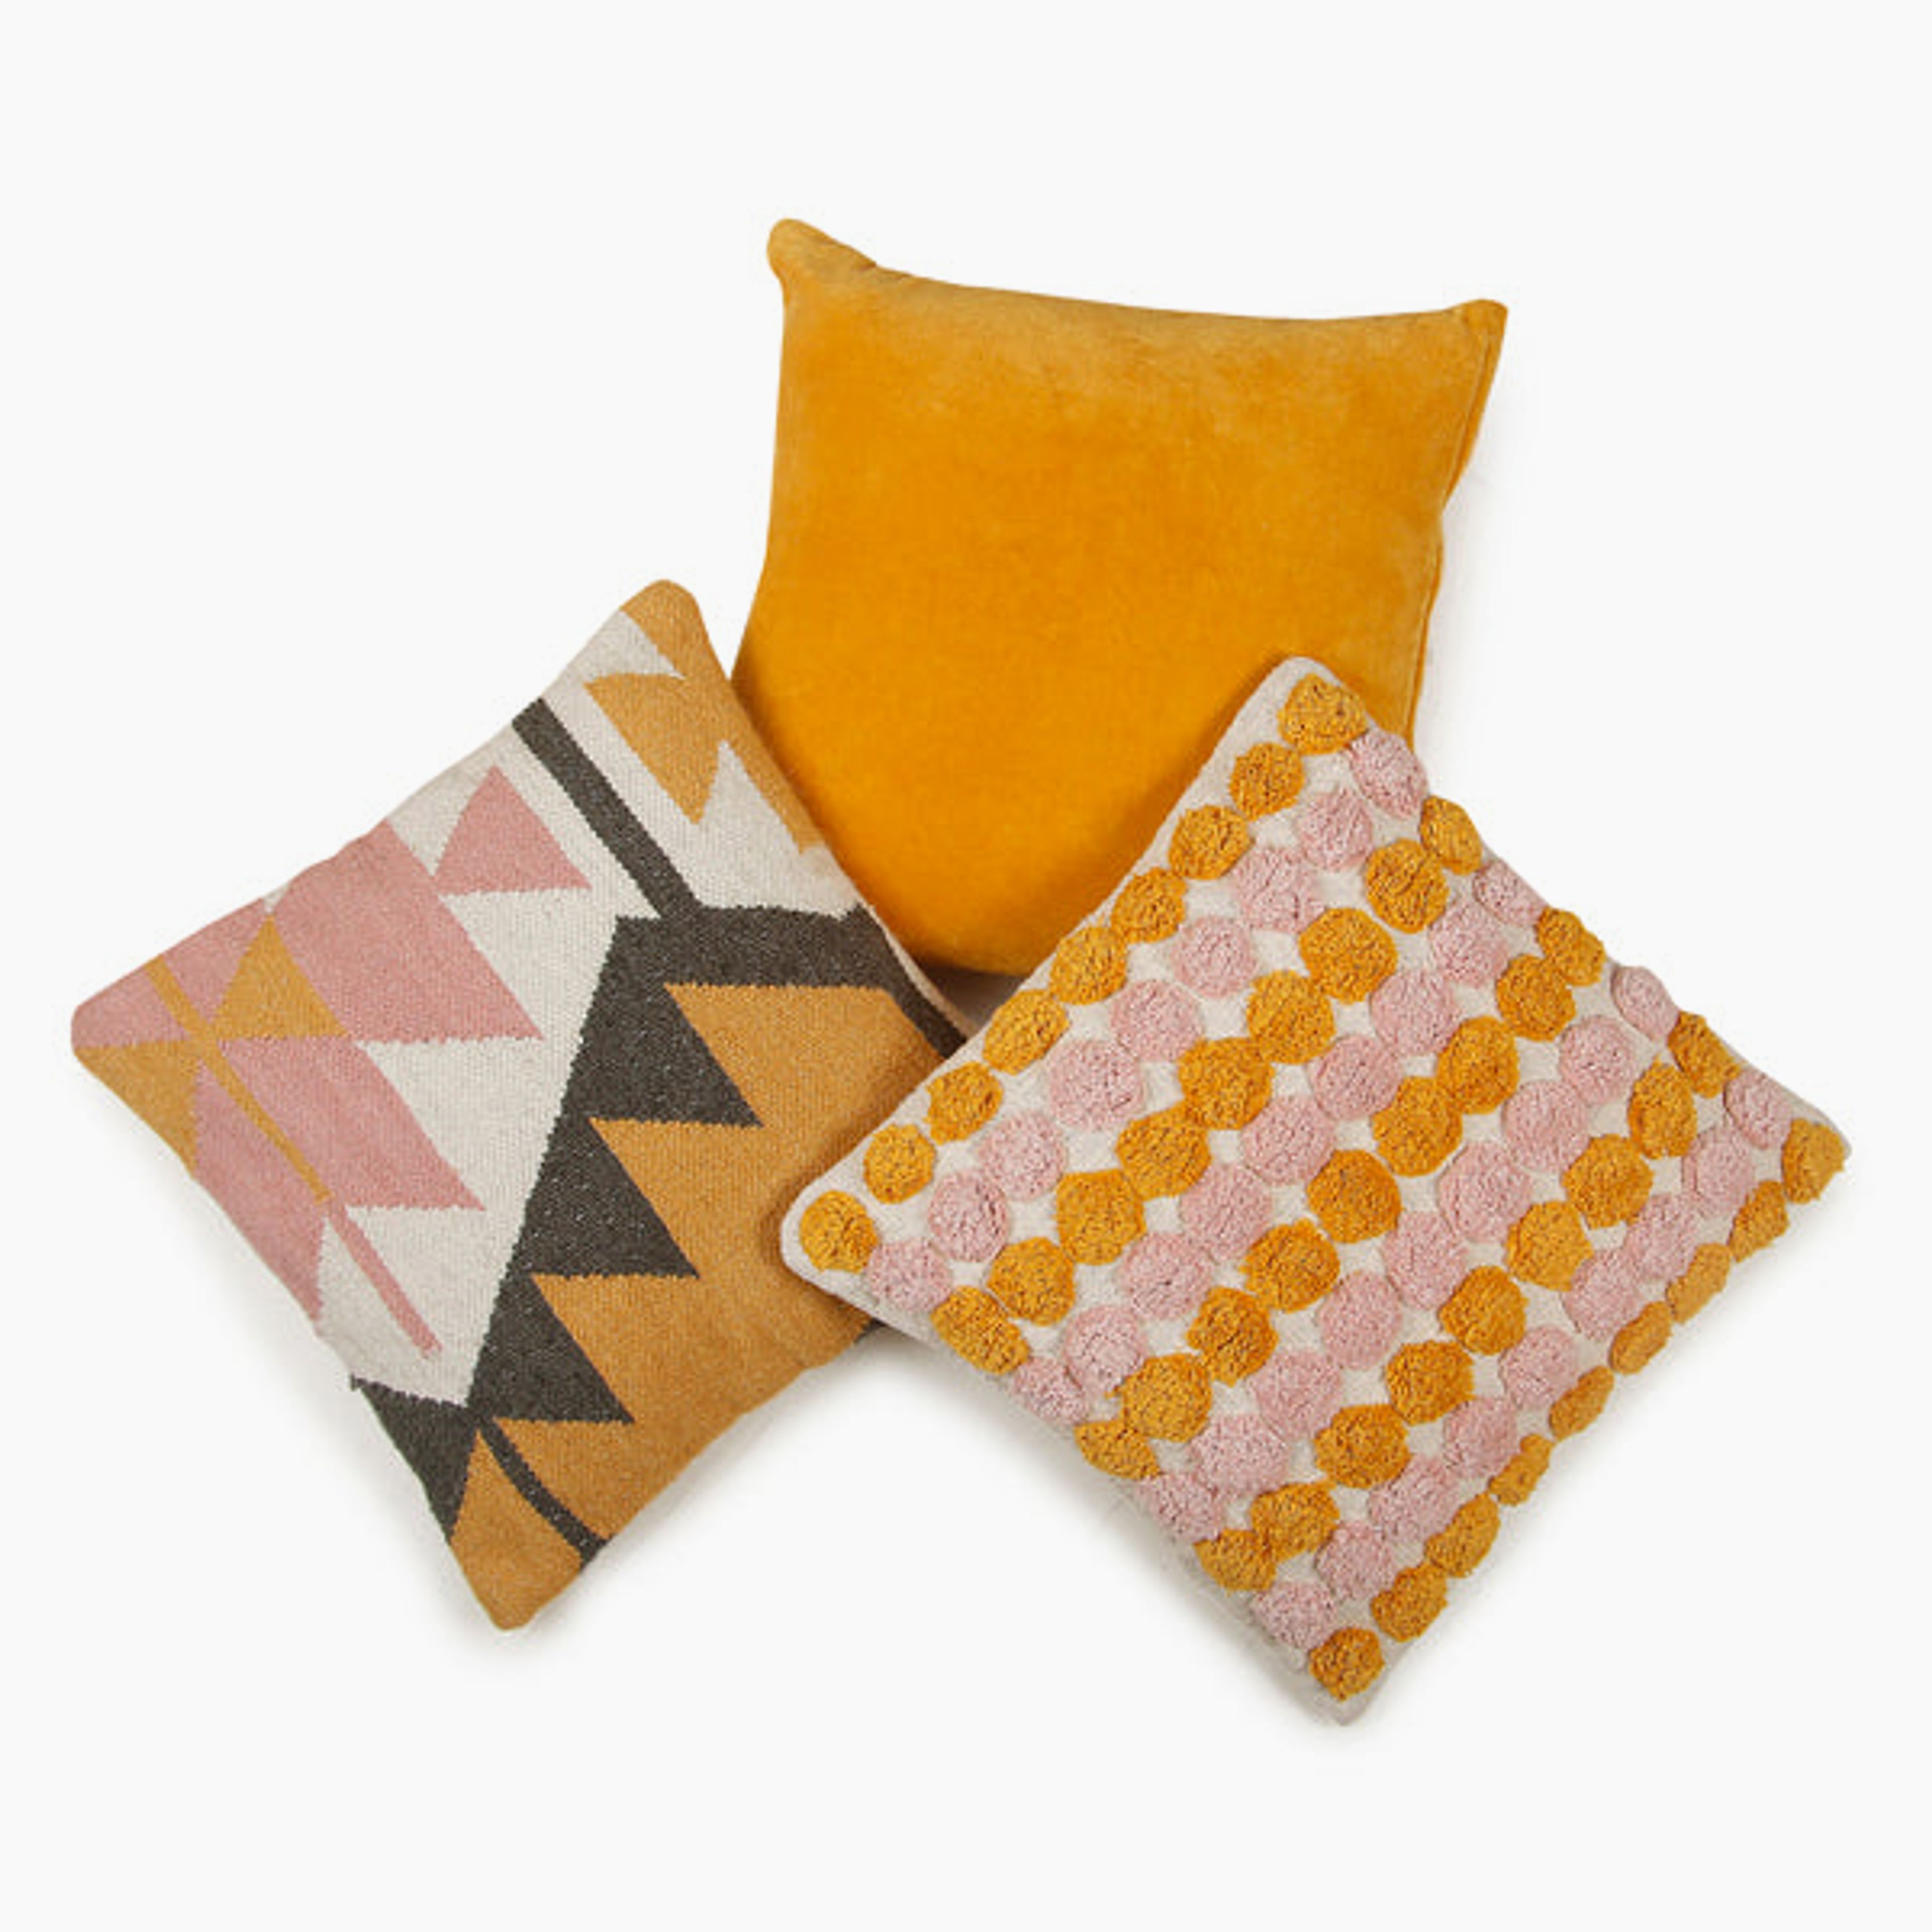 Desert Kilim Geometric Handloom Pillow, Blush - 18x18 Inch